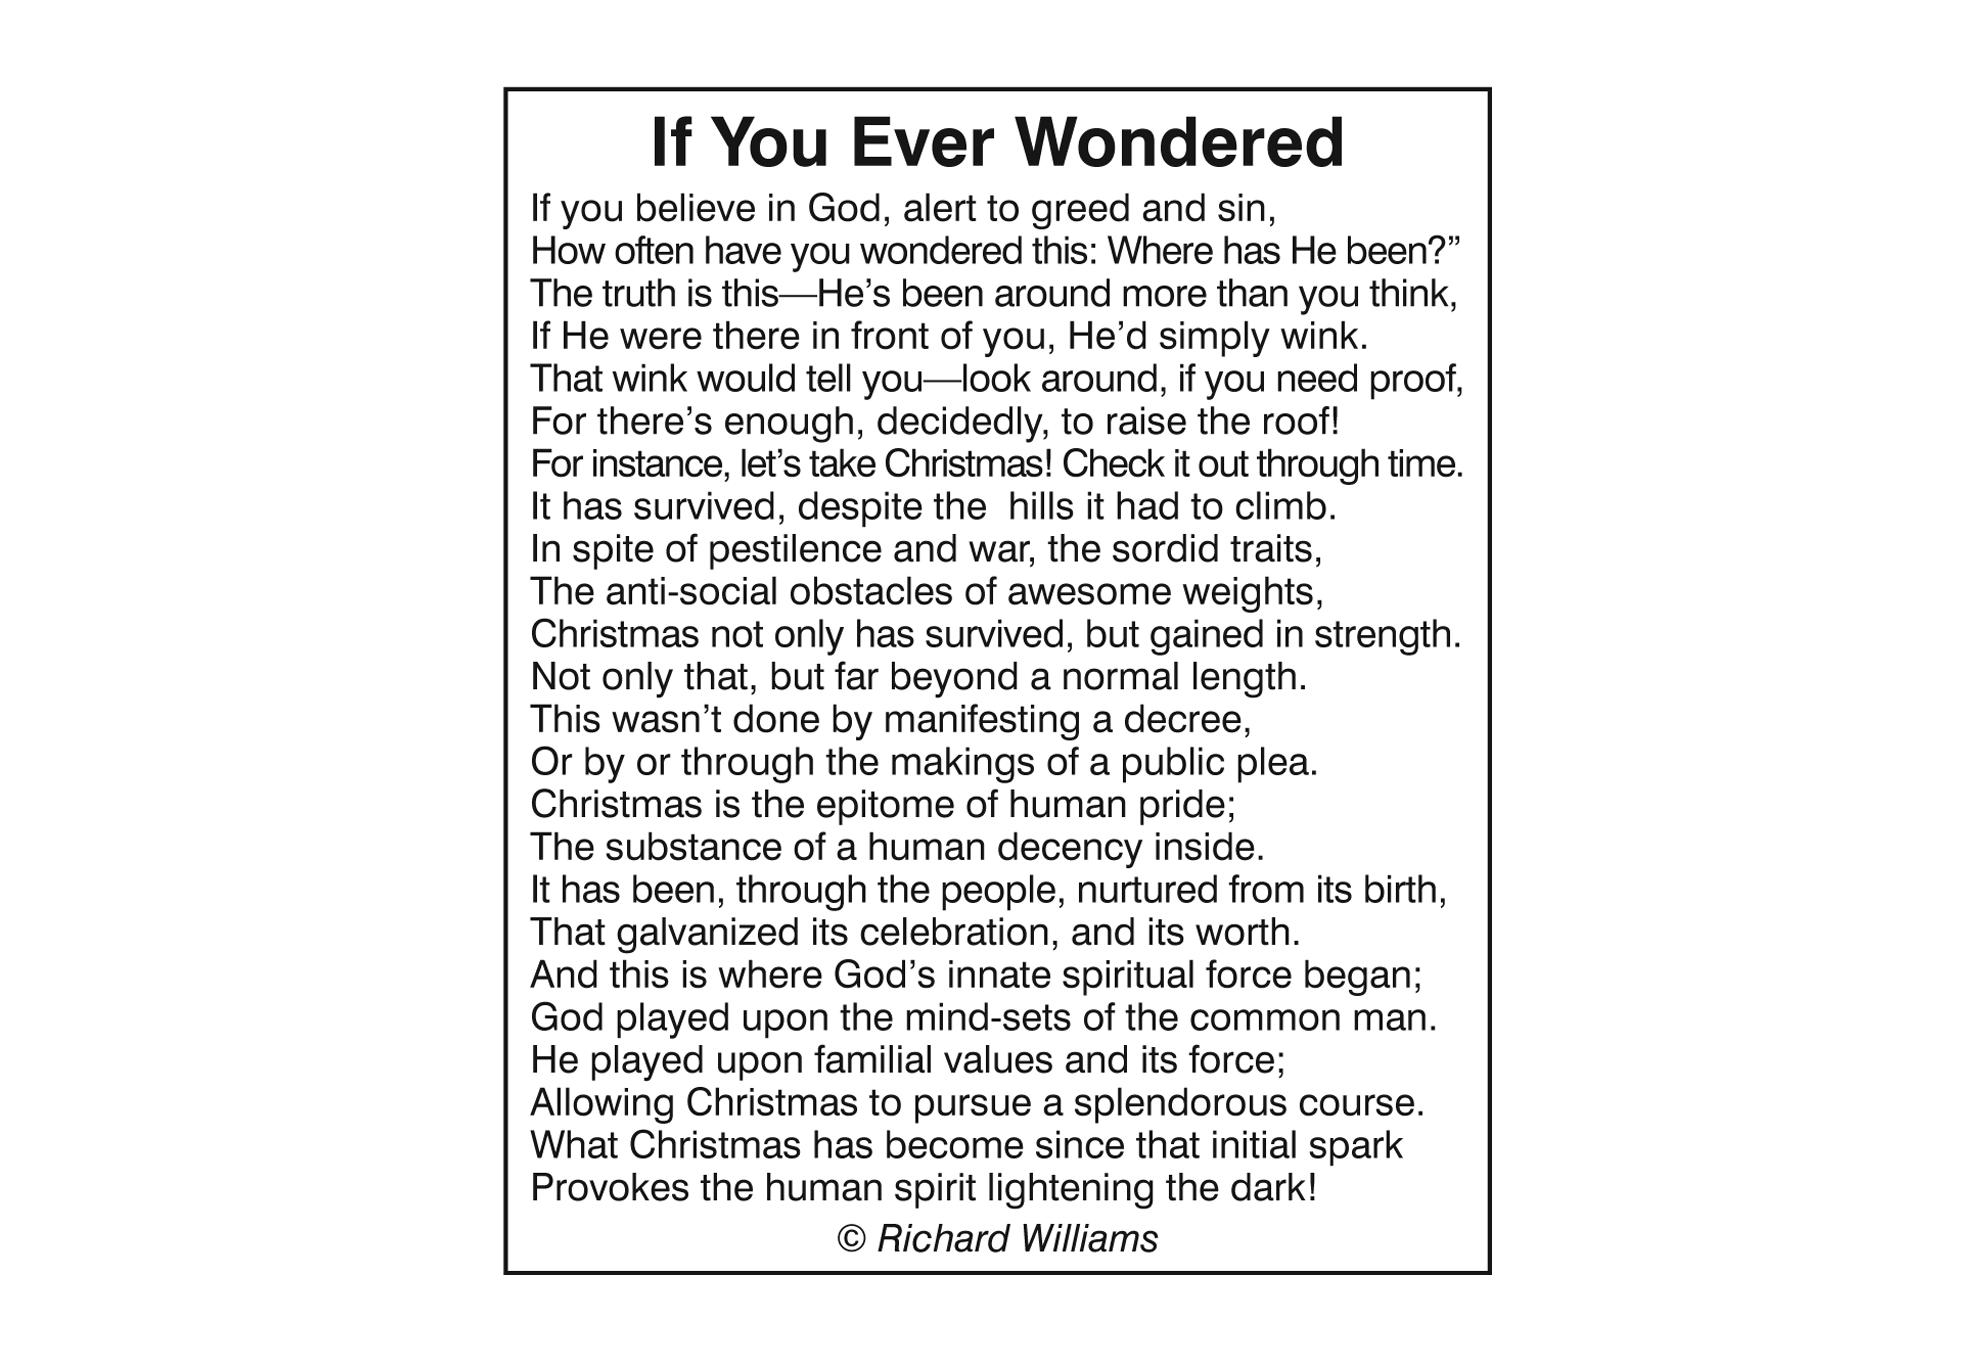 Richard Williams Poem: If You Ever Wondered